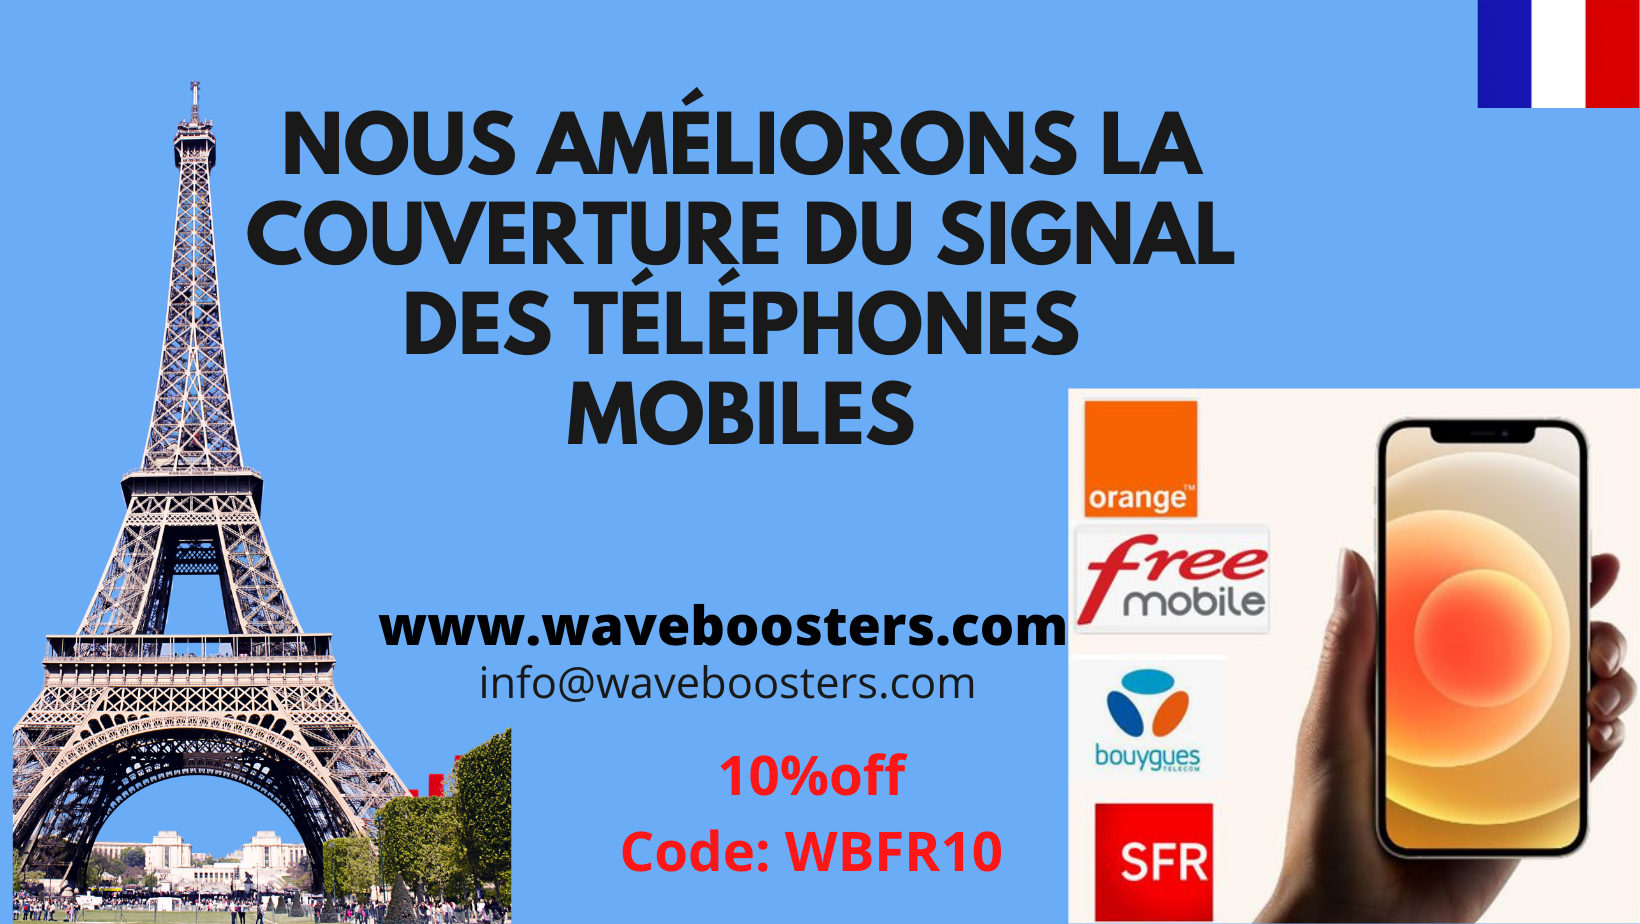 waveboosters.com/fr